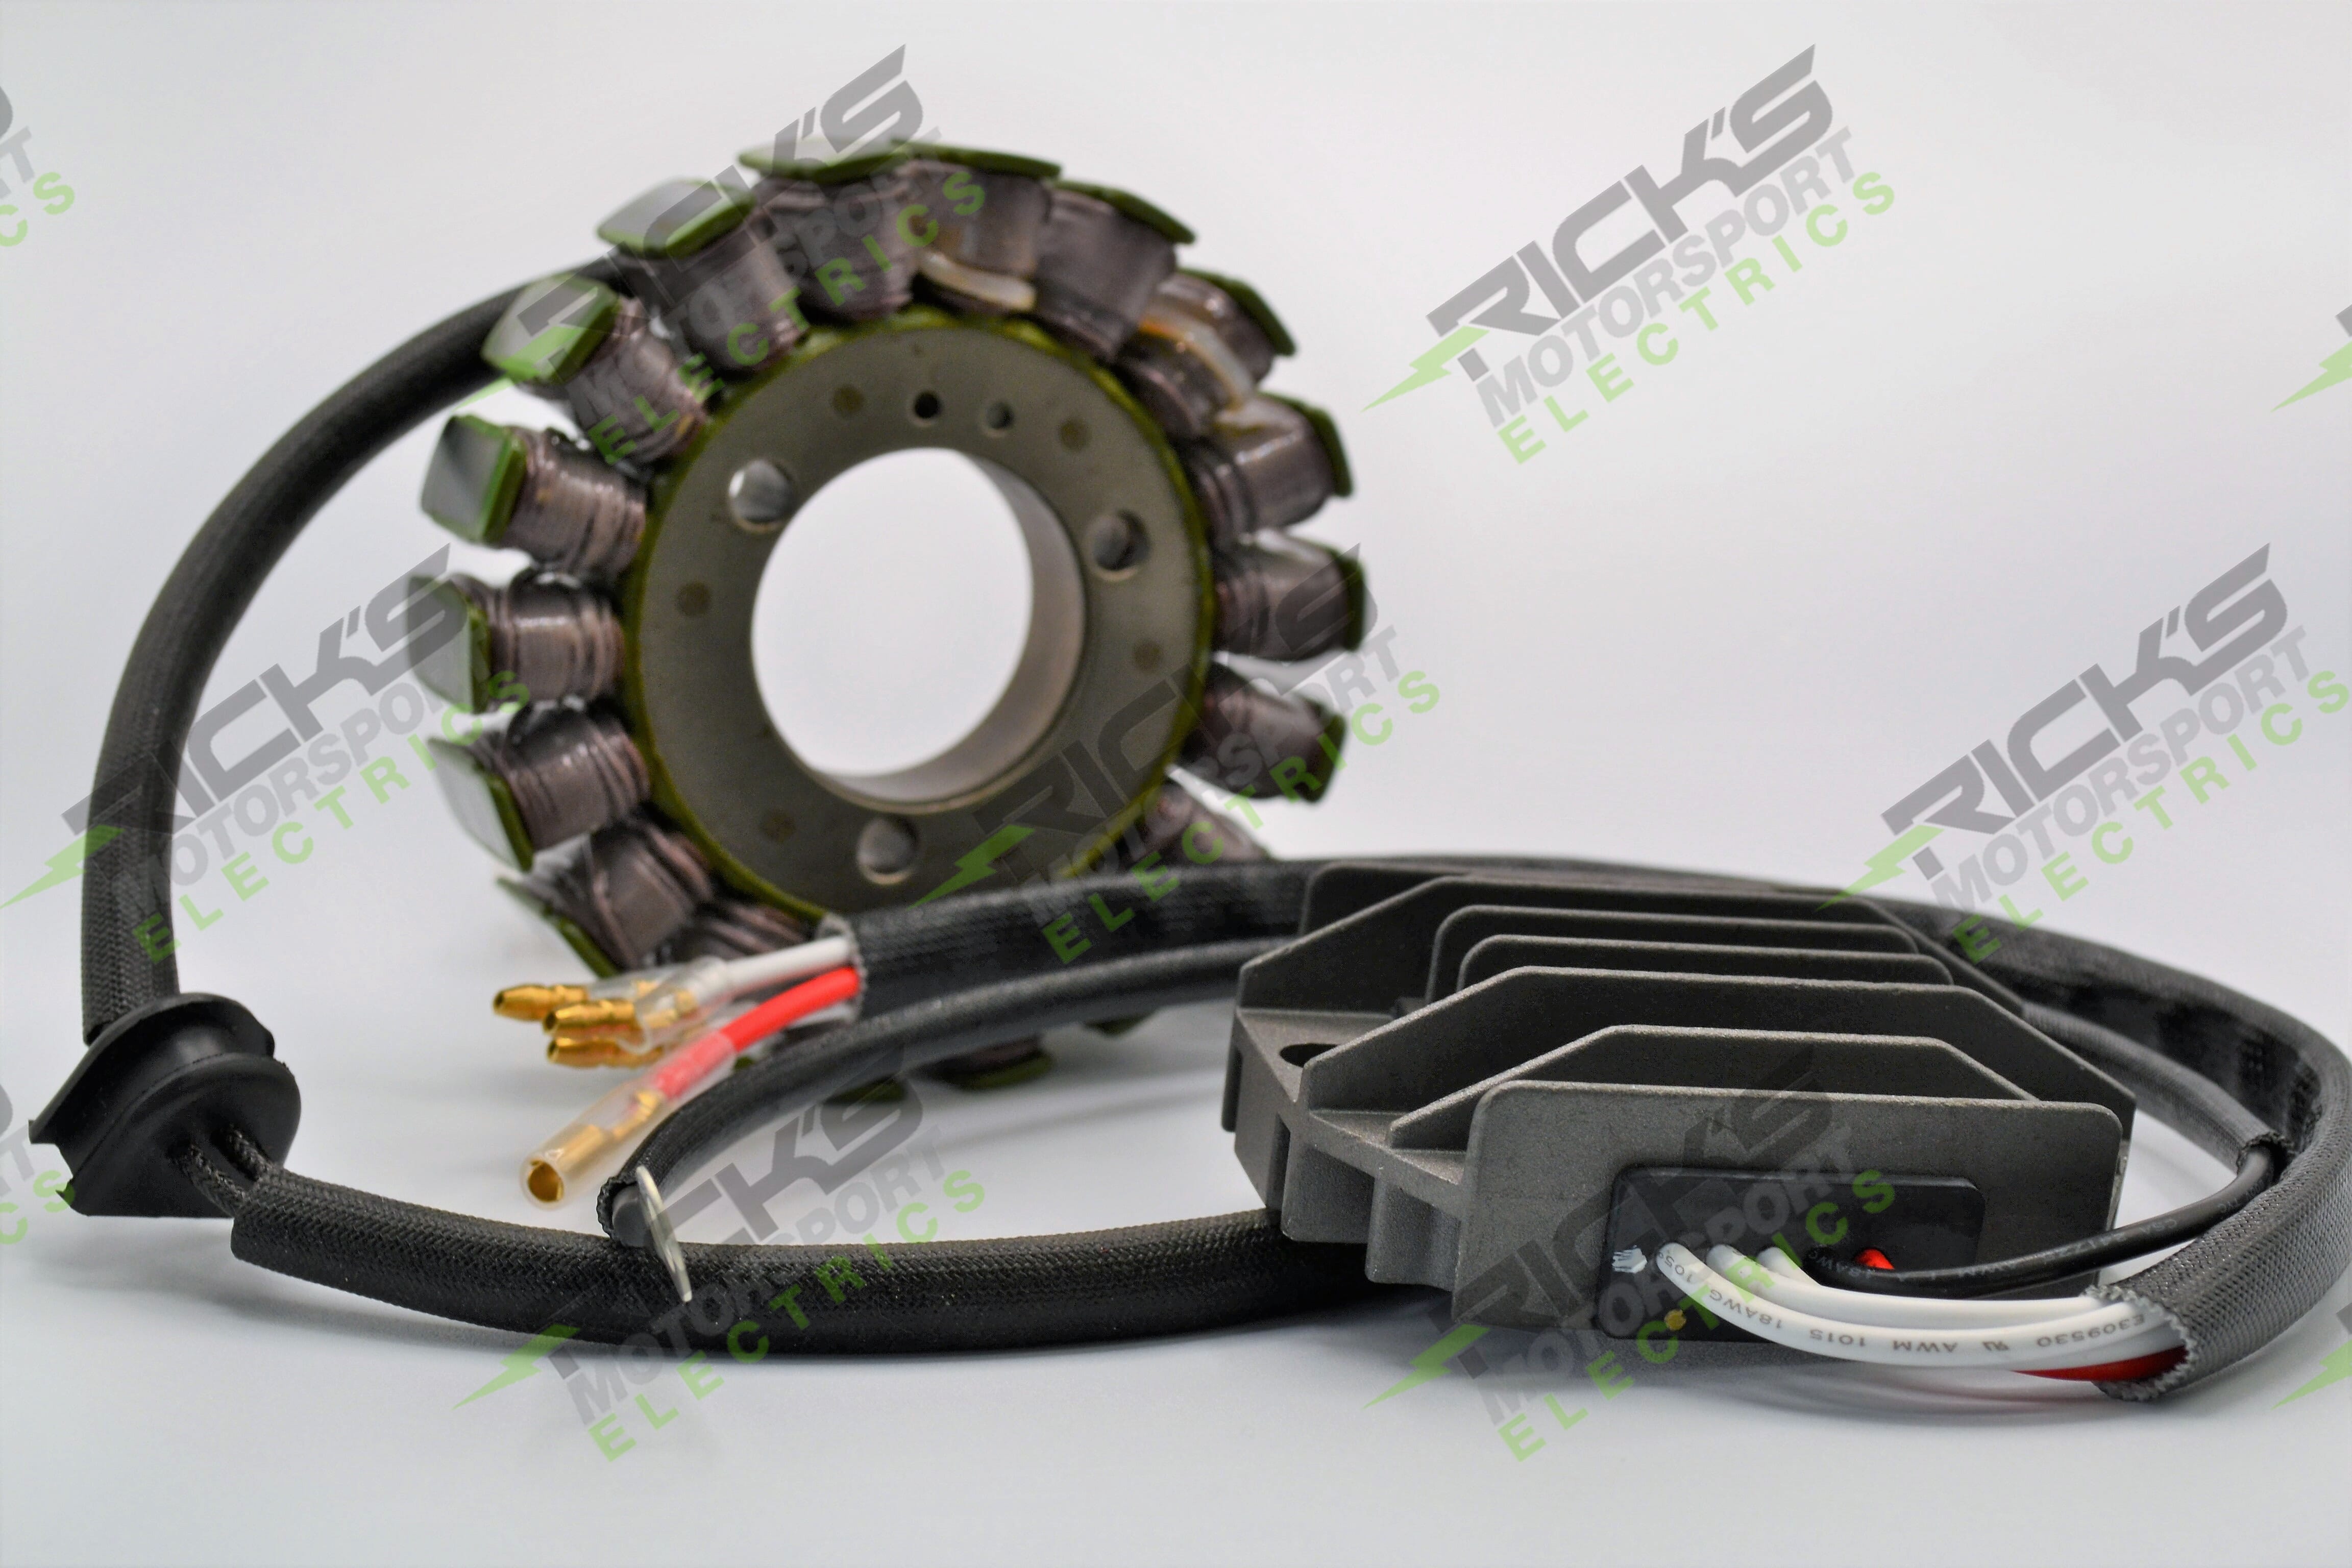 Aftermarket Motorsport Parts  Kits Superstore - Charging, Starting,  Ignition